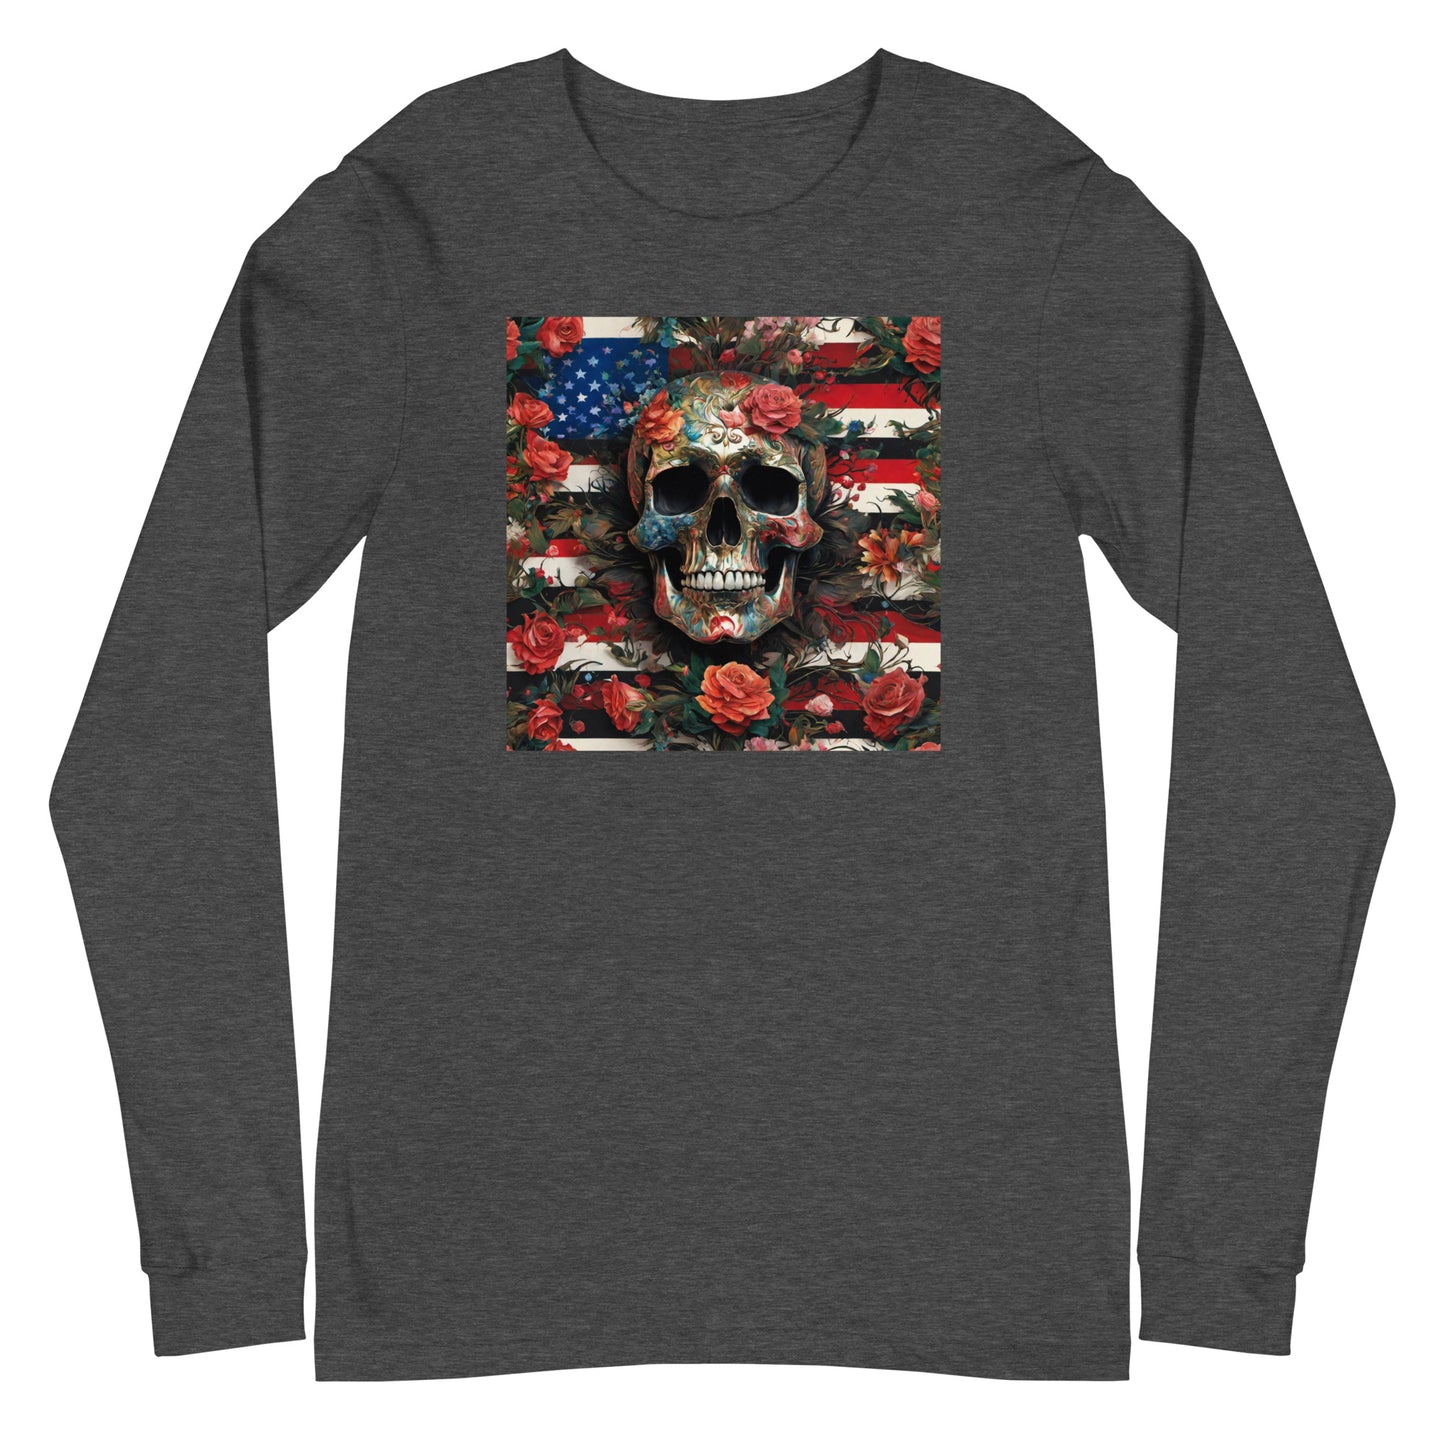 Skull, Roses, and Flag Long Sleeve Graphic Tee Dark Grey Heather